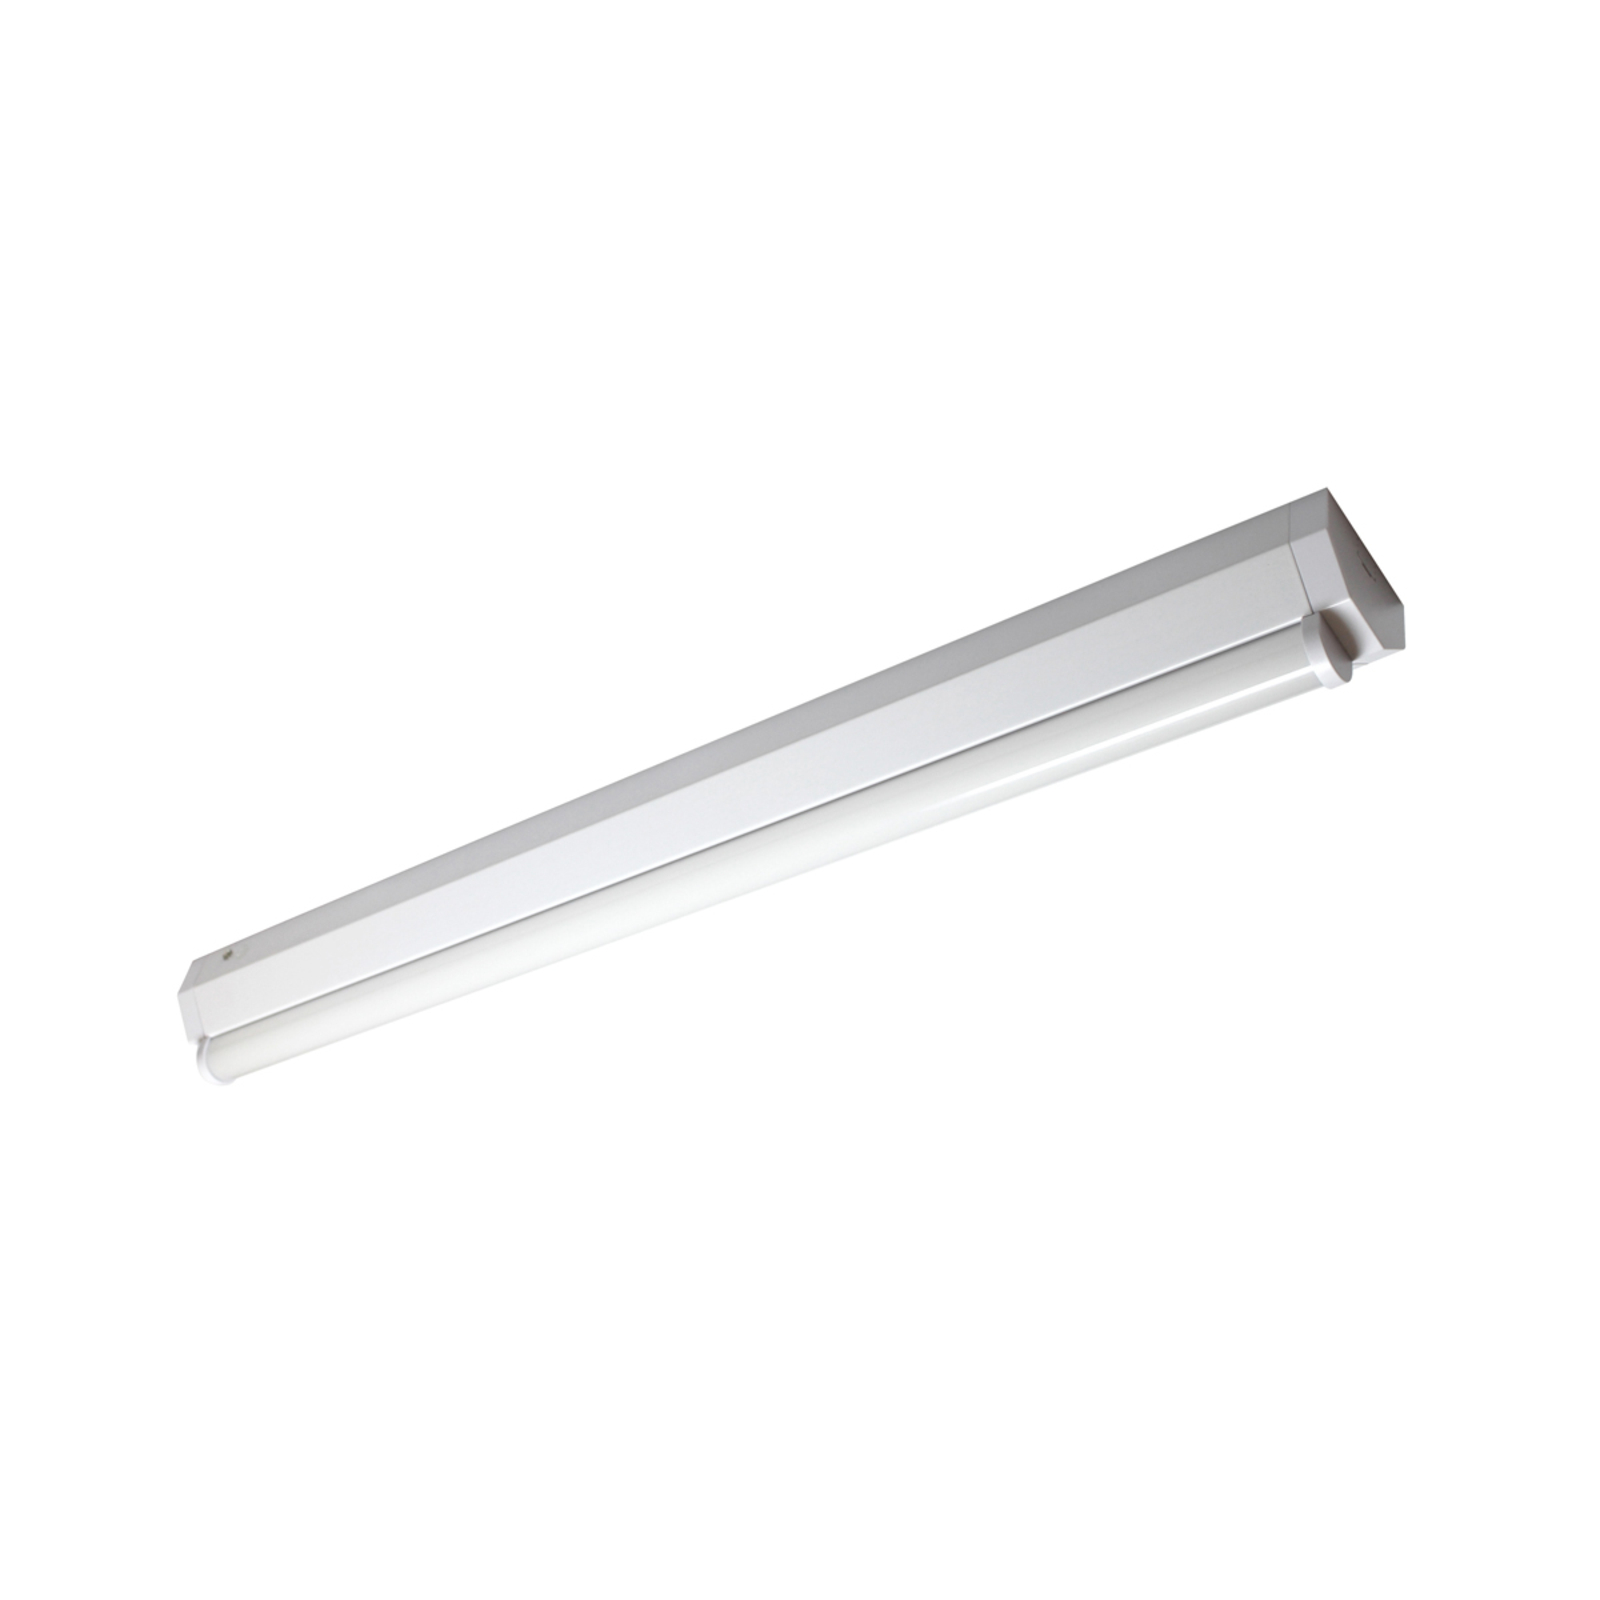 Universelle LED-Deckenlampe Basic 1 - 60cm